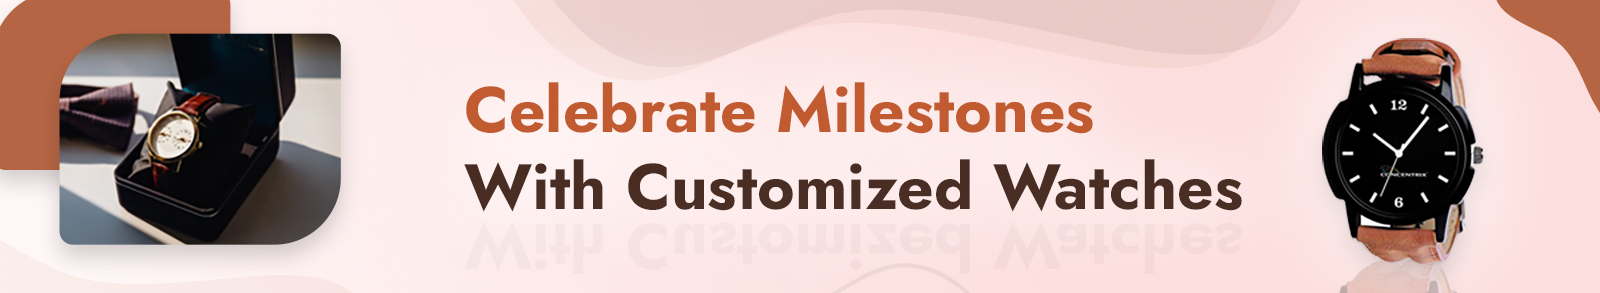 Celebrate Milestones With Customized Watches